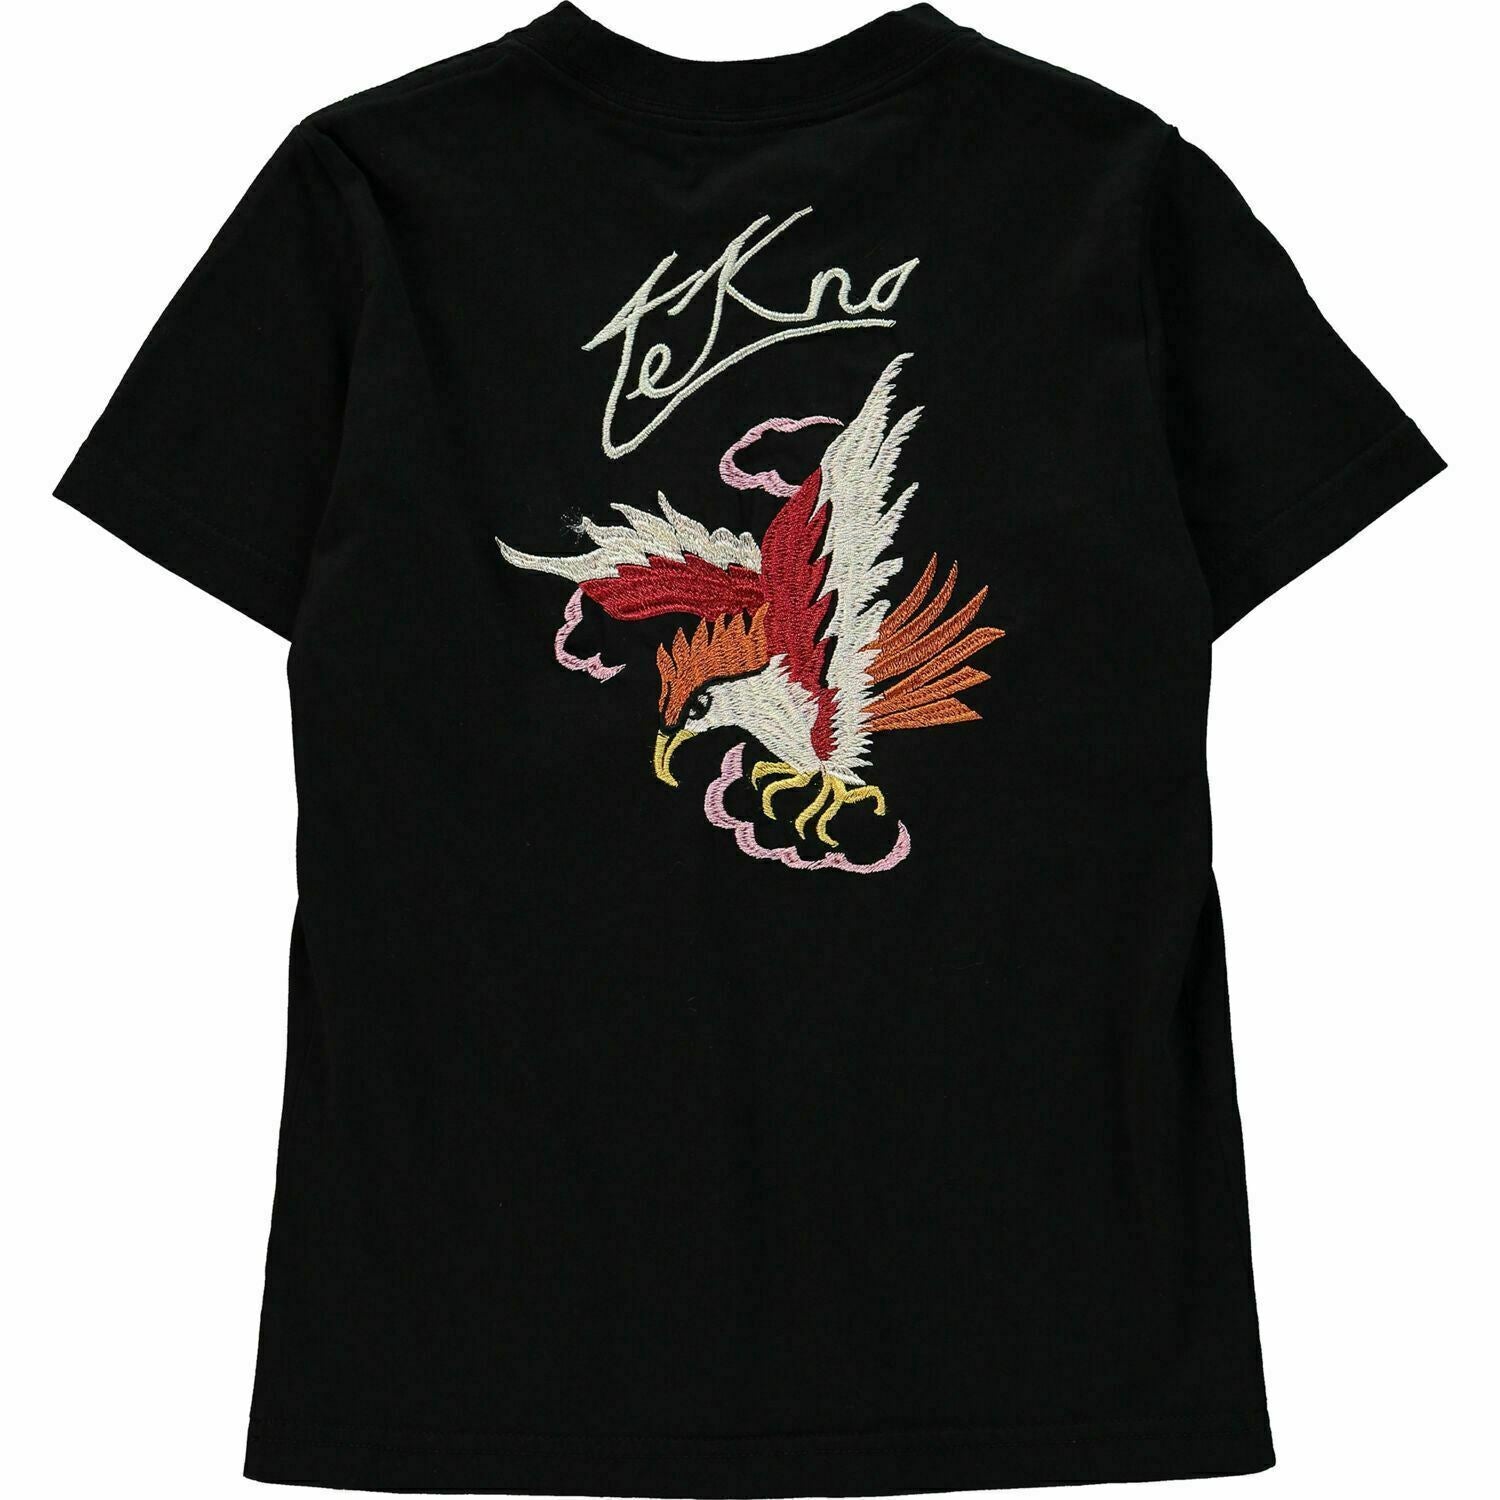 DIESEL Girls' Kids' T-DARIA Dragon Embroidery T-shirt, Black, size 8 years